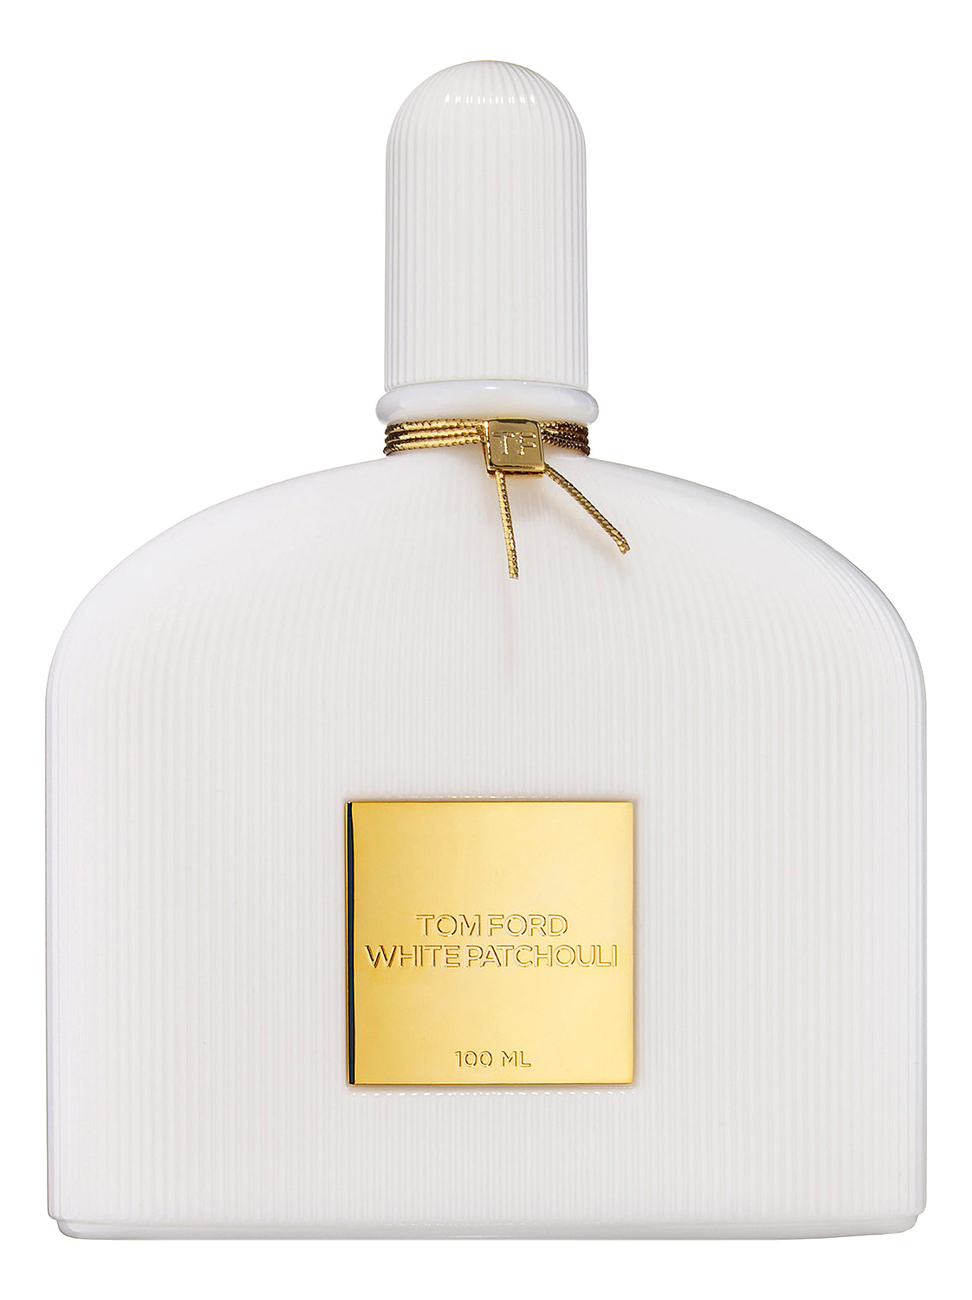 Tom Ford White Patchouli: парфюмерная вода 100мл тестер